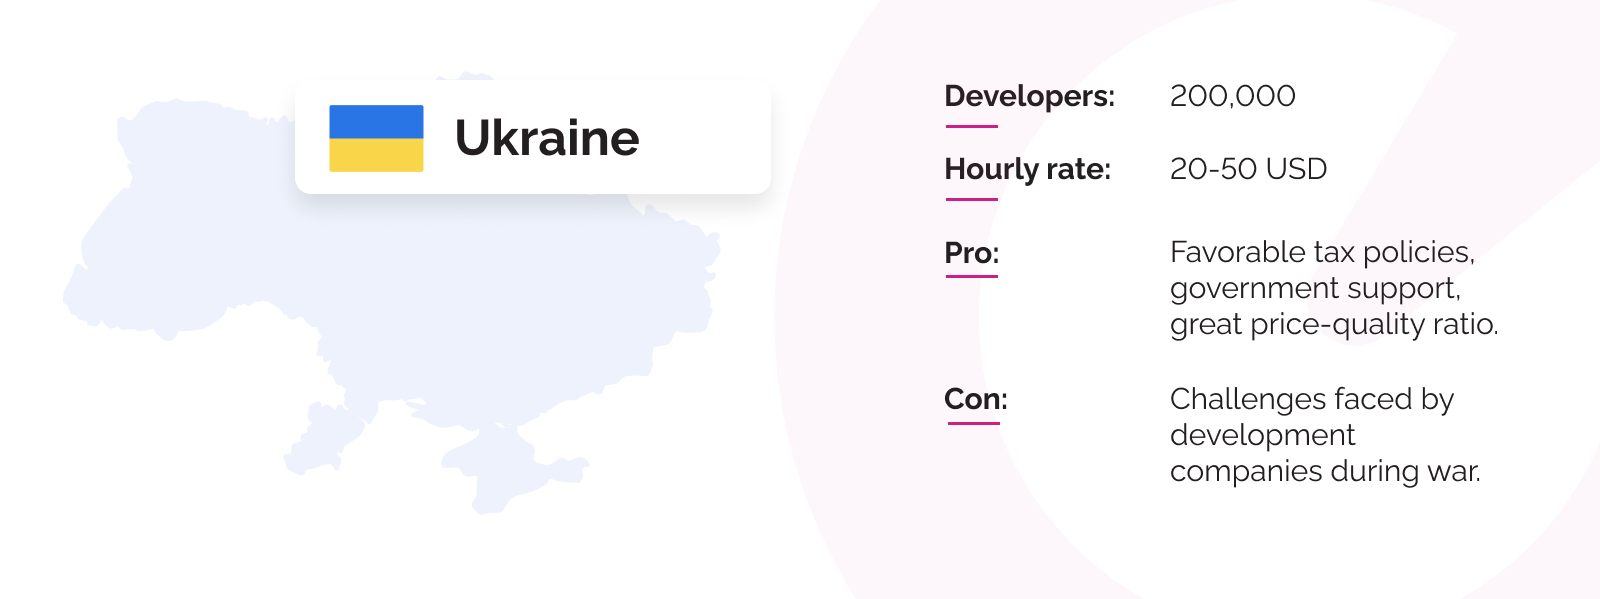 Software development outsourcing statistics for Ukraine.